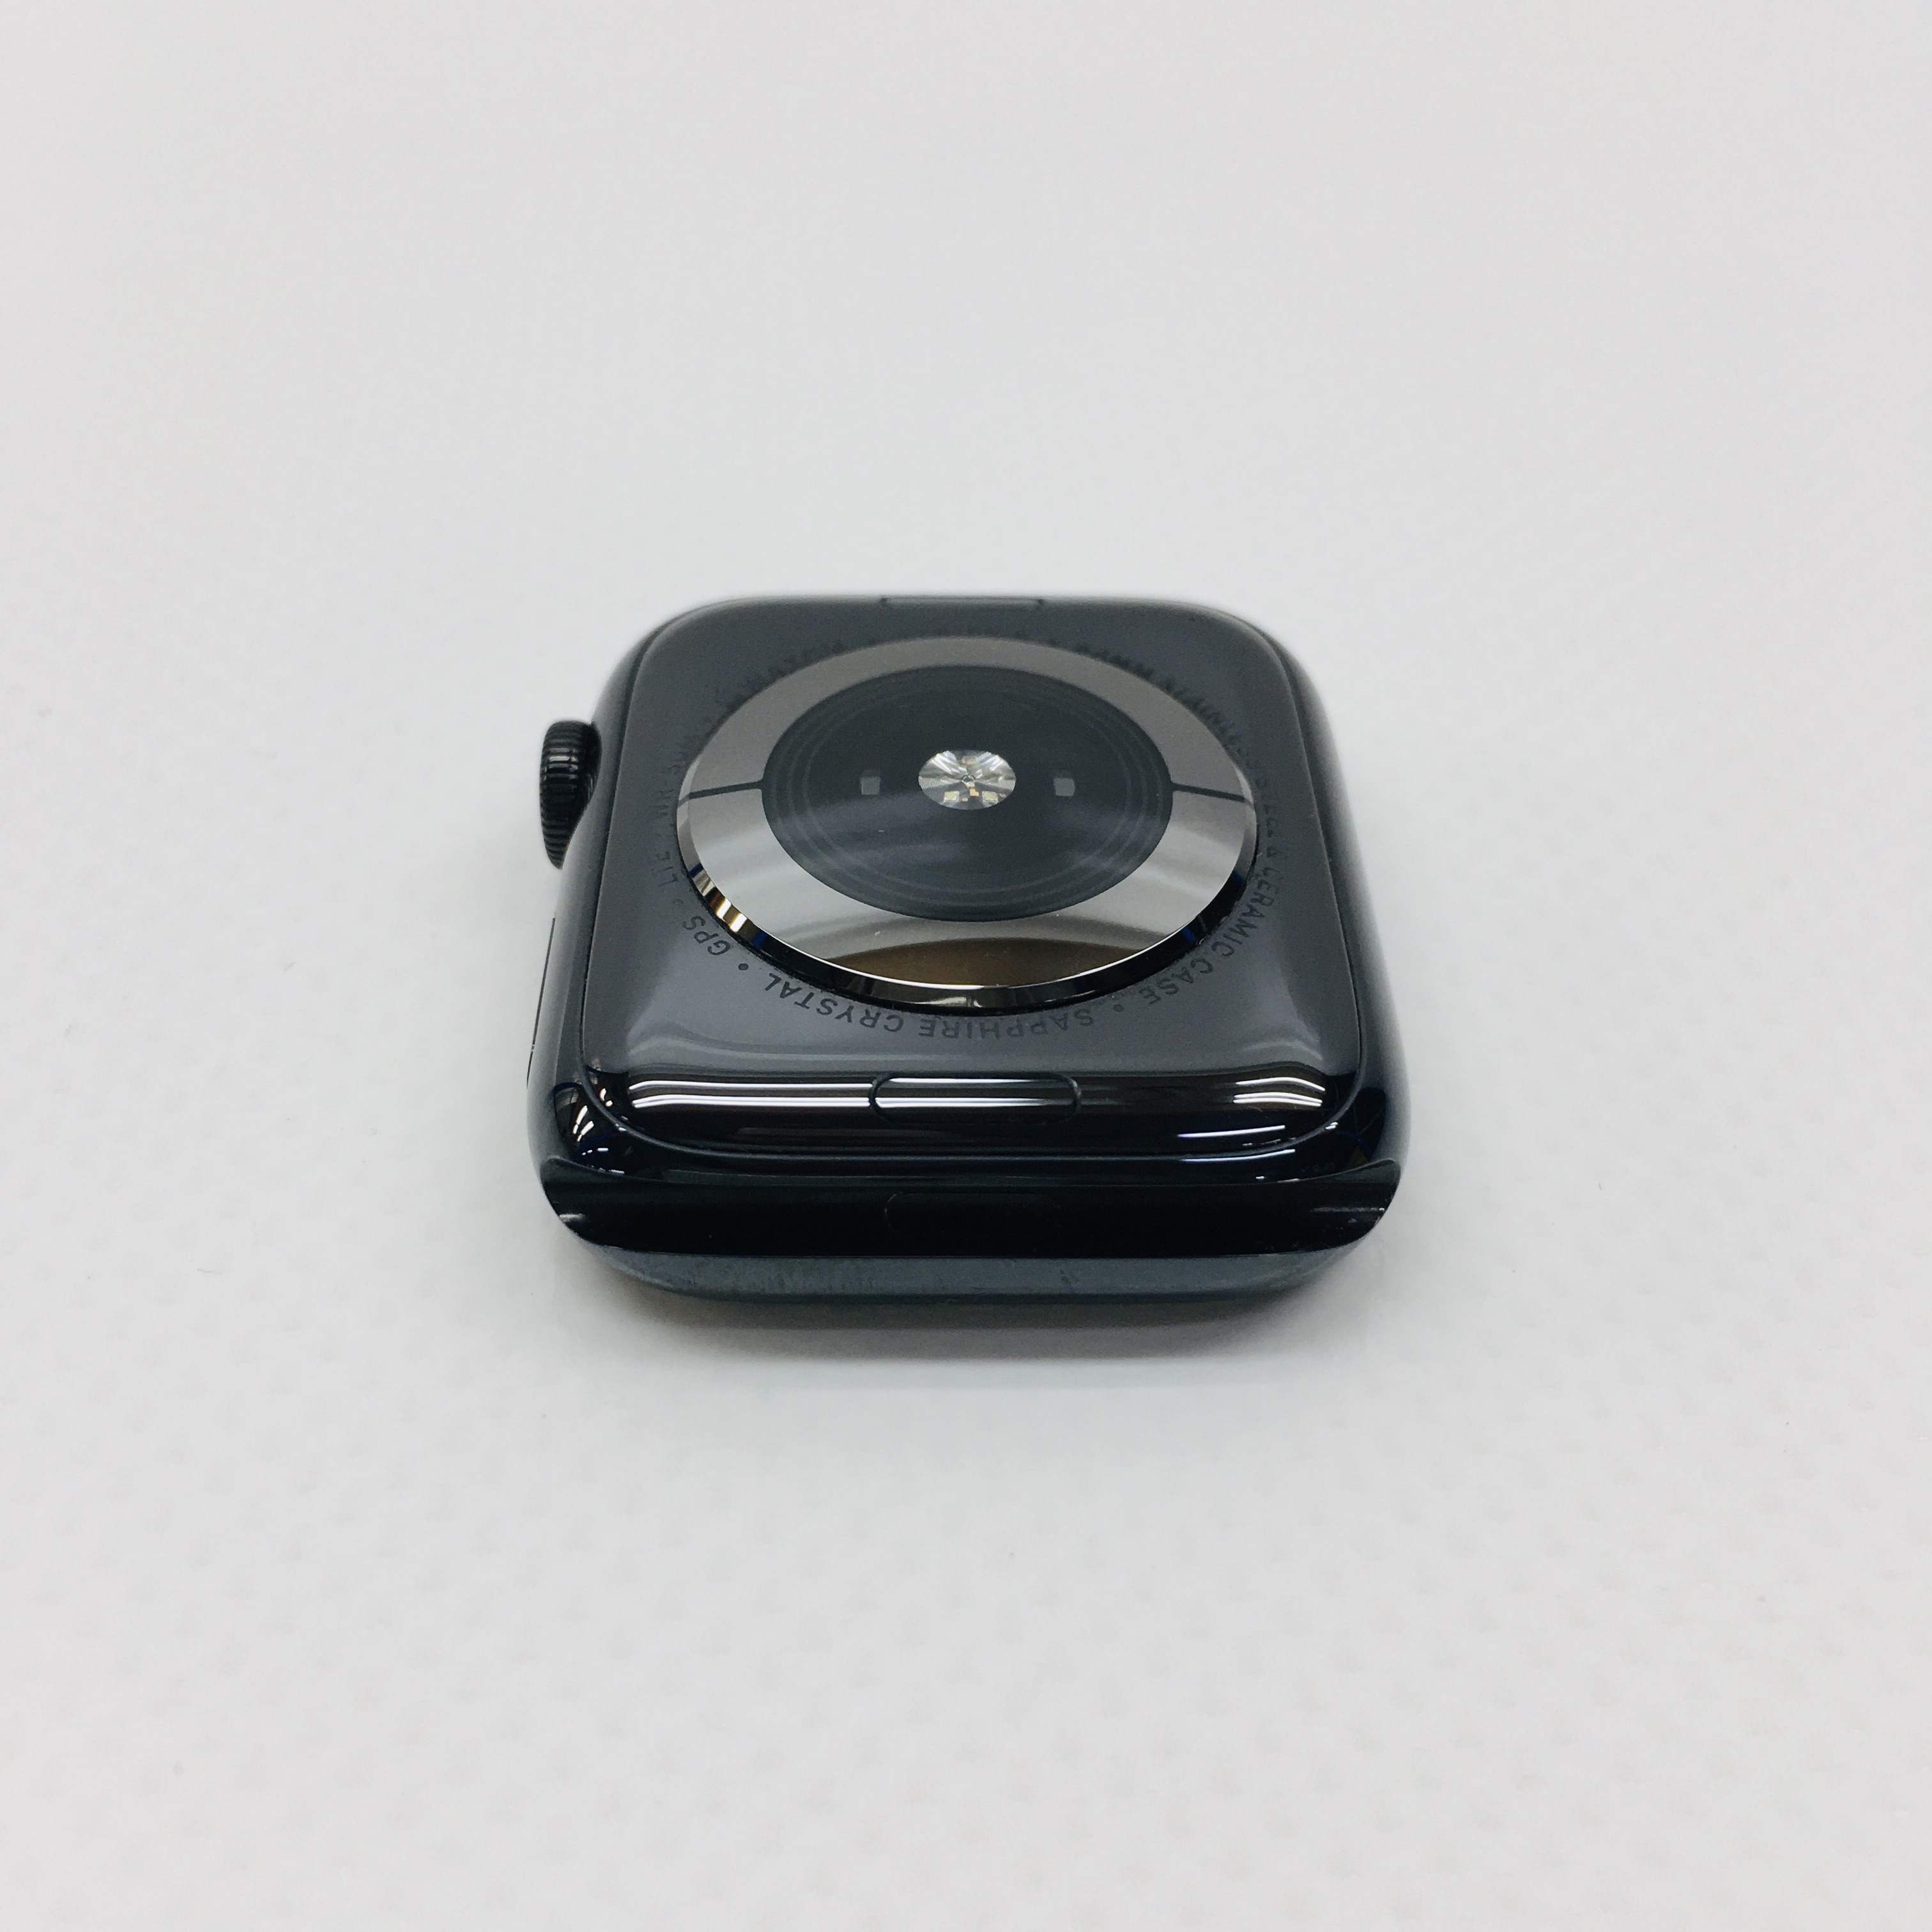 Watch Series 5 Steel Cellular (44mm), Space Black, image 7